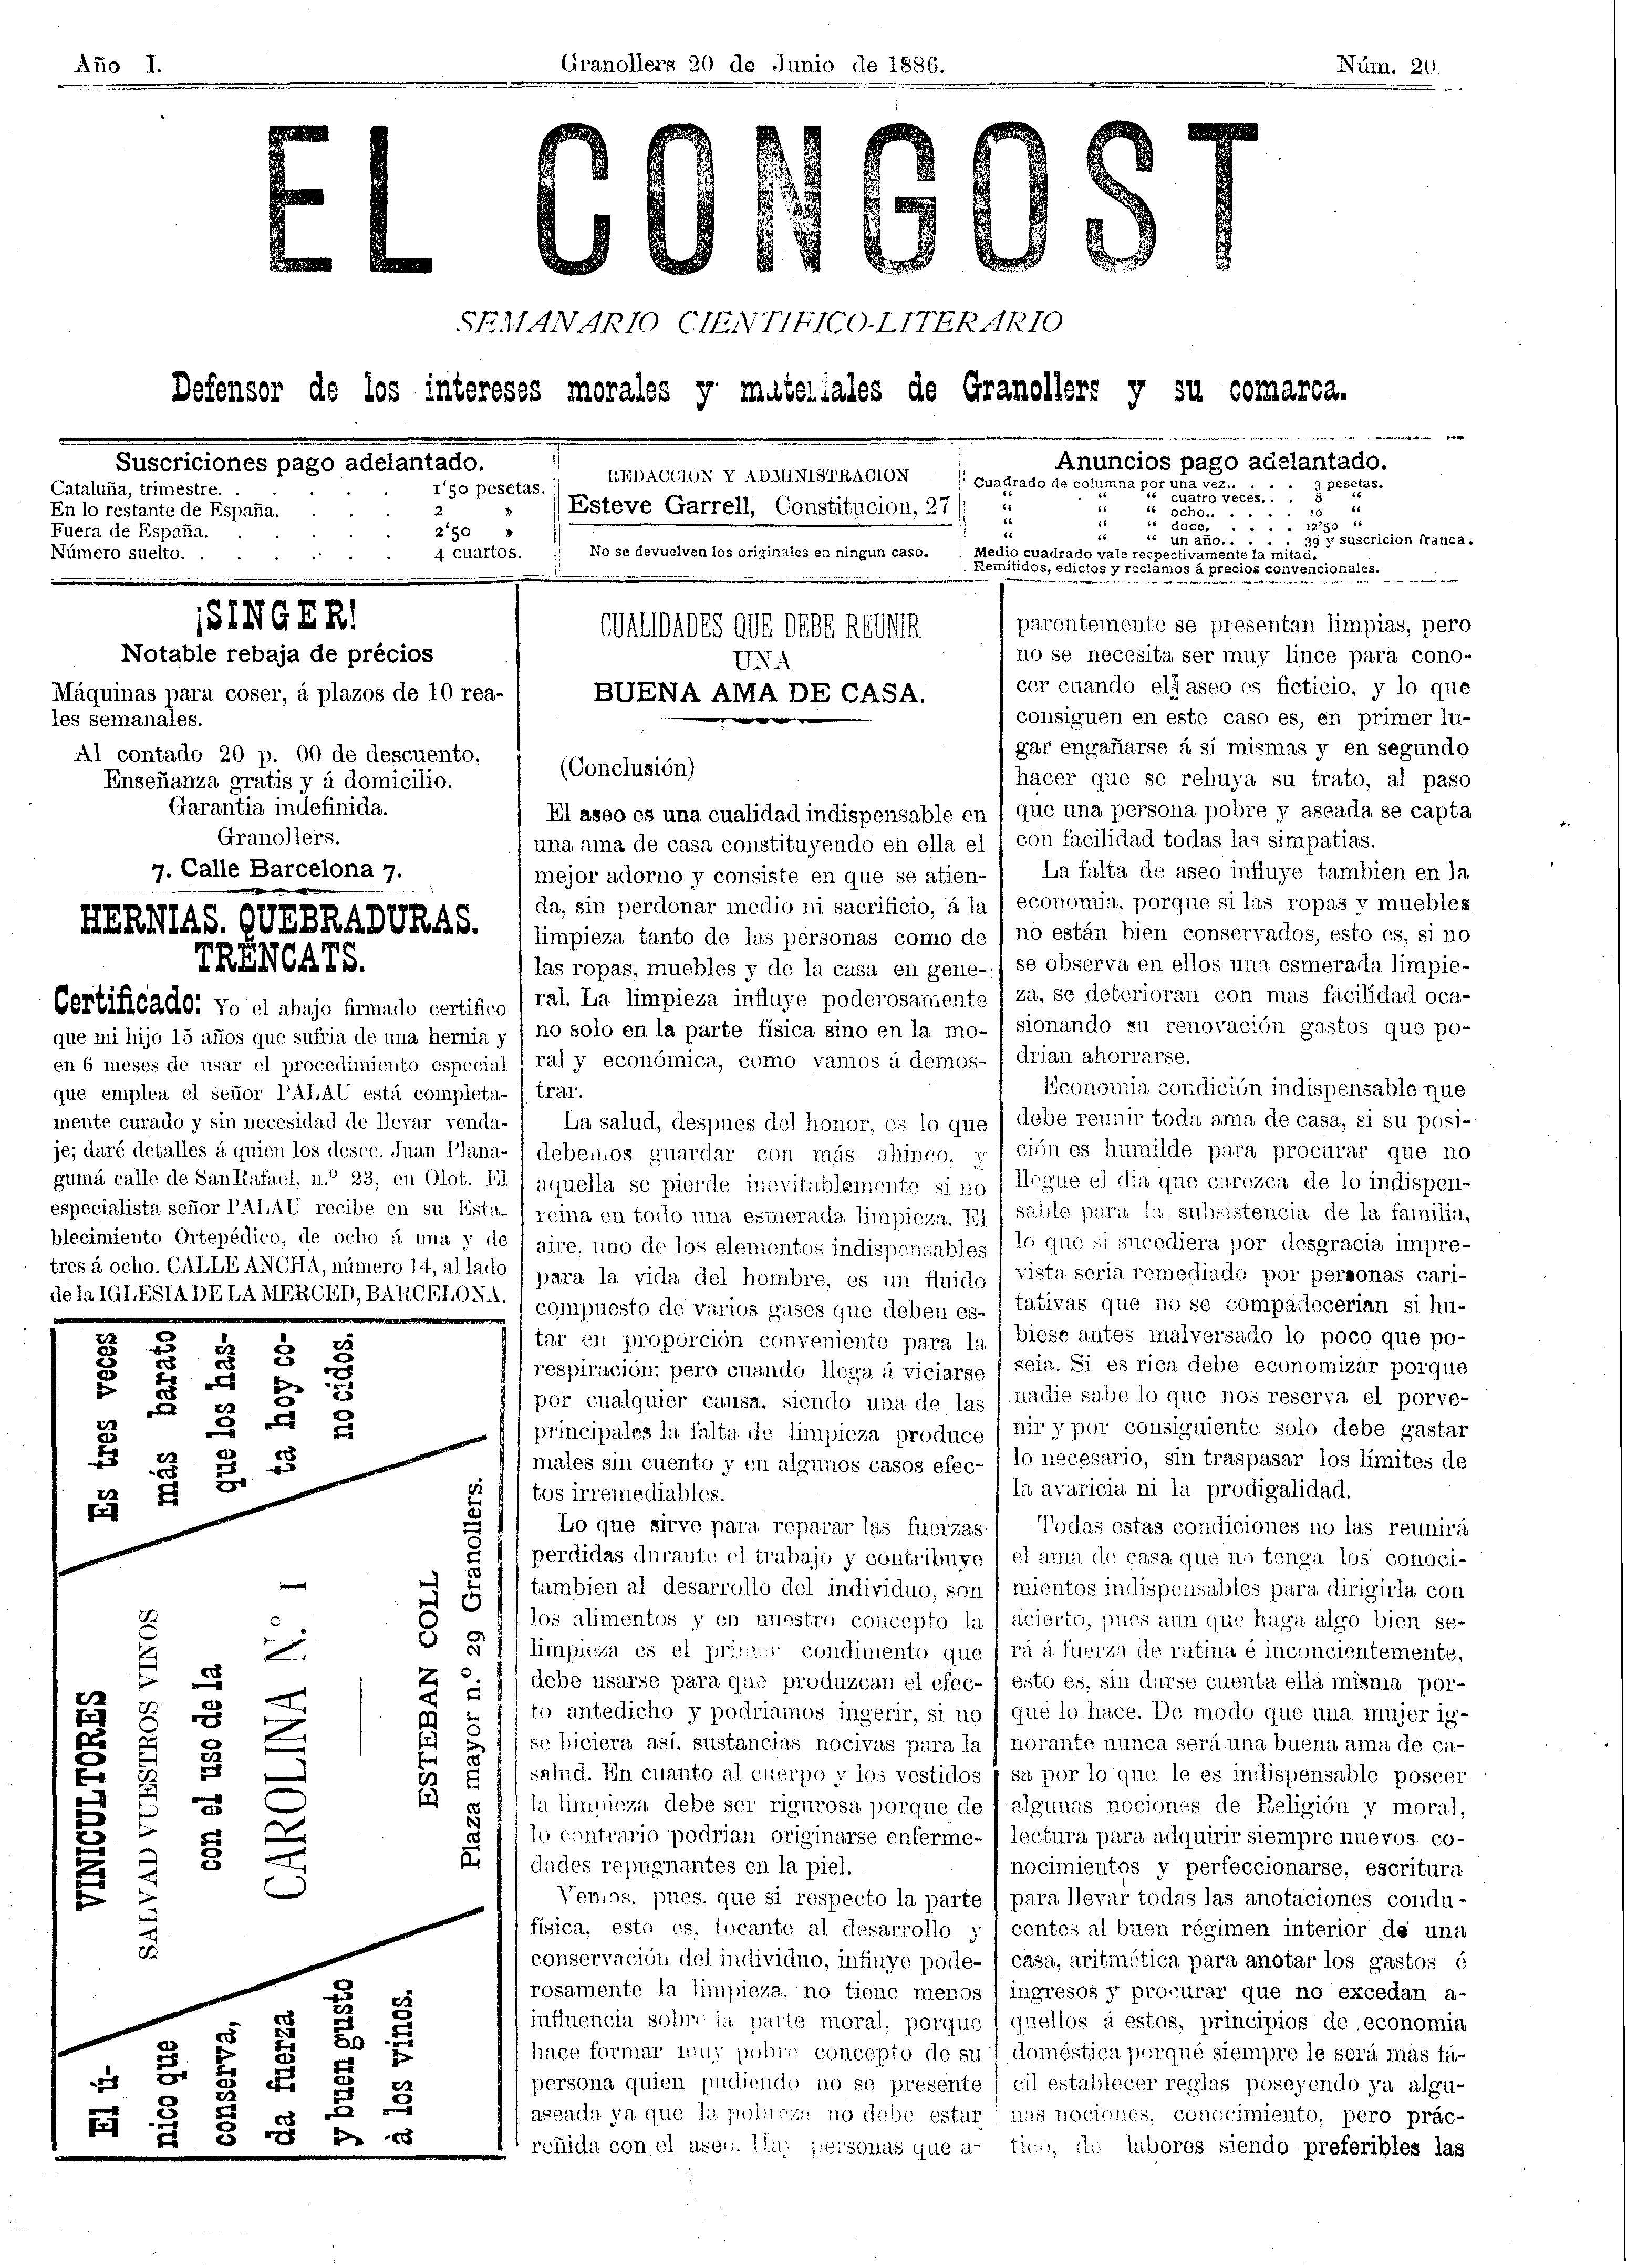 El Congost, 20/6/1886 [Exemplar]